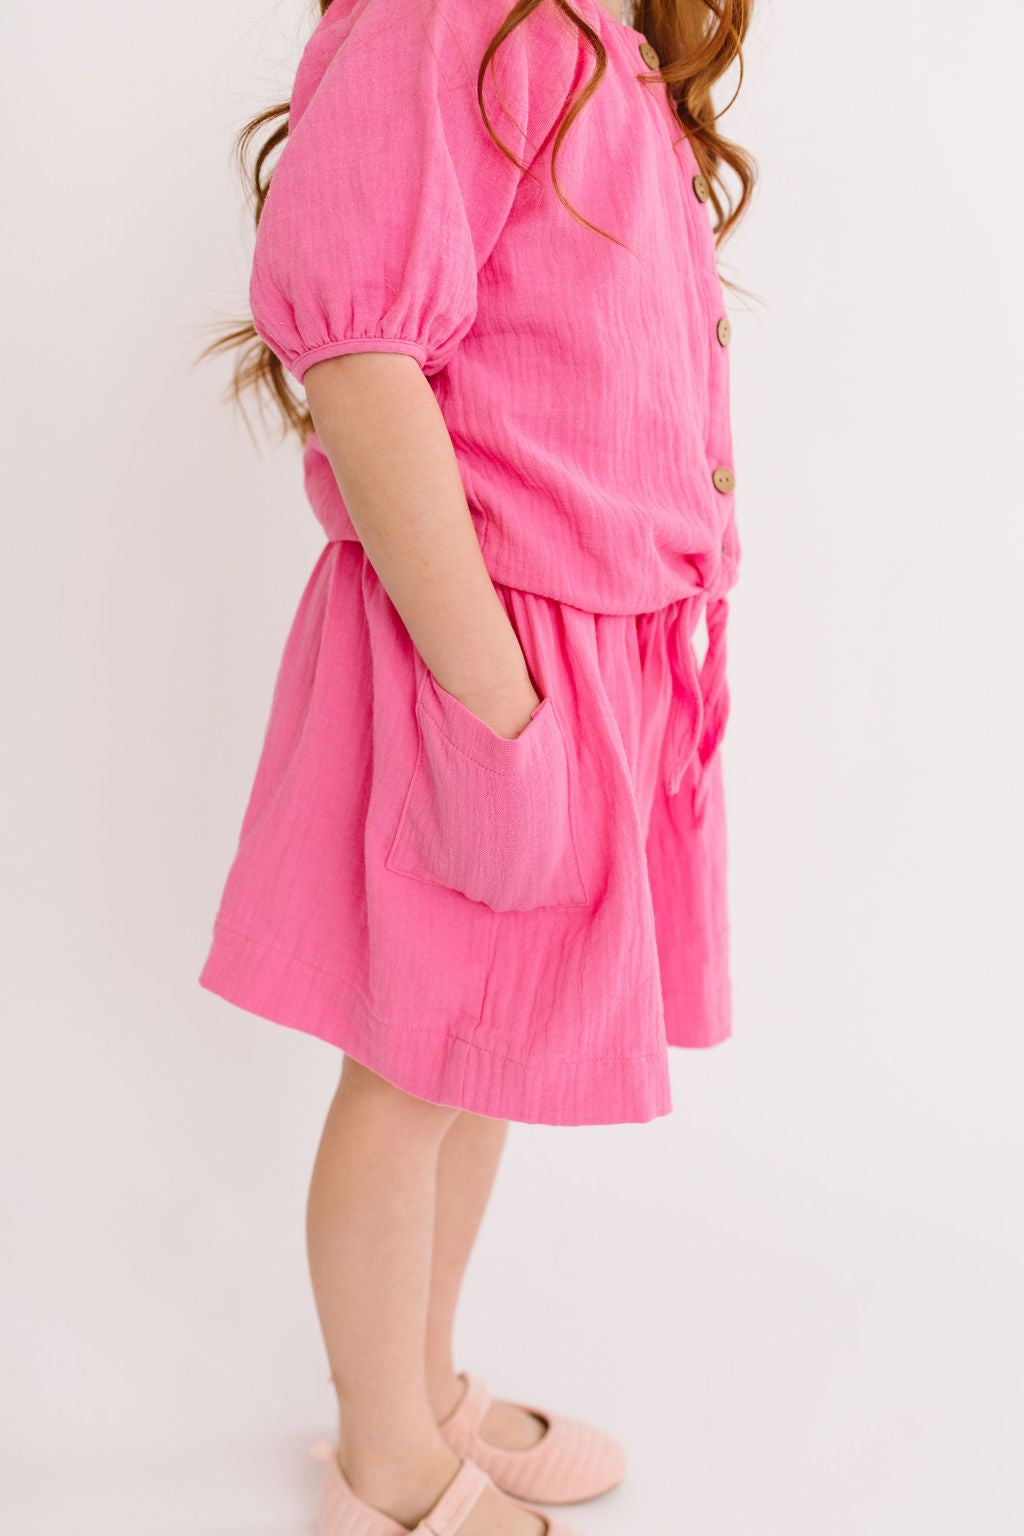 Pocket Skirt in Azalea Pink